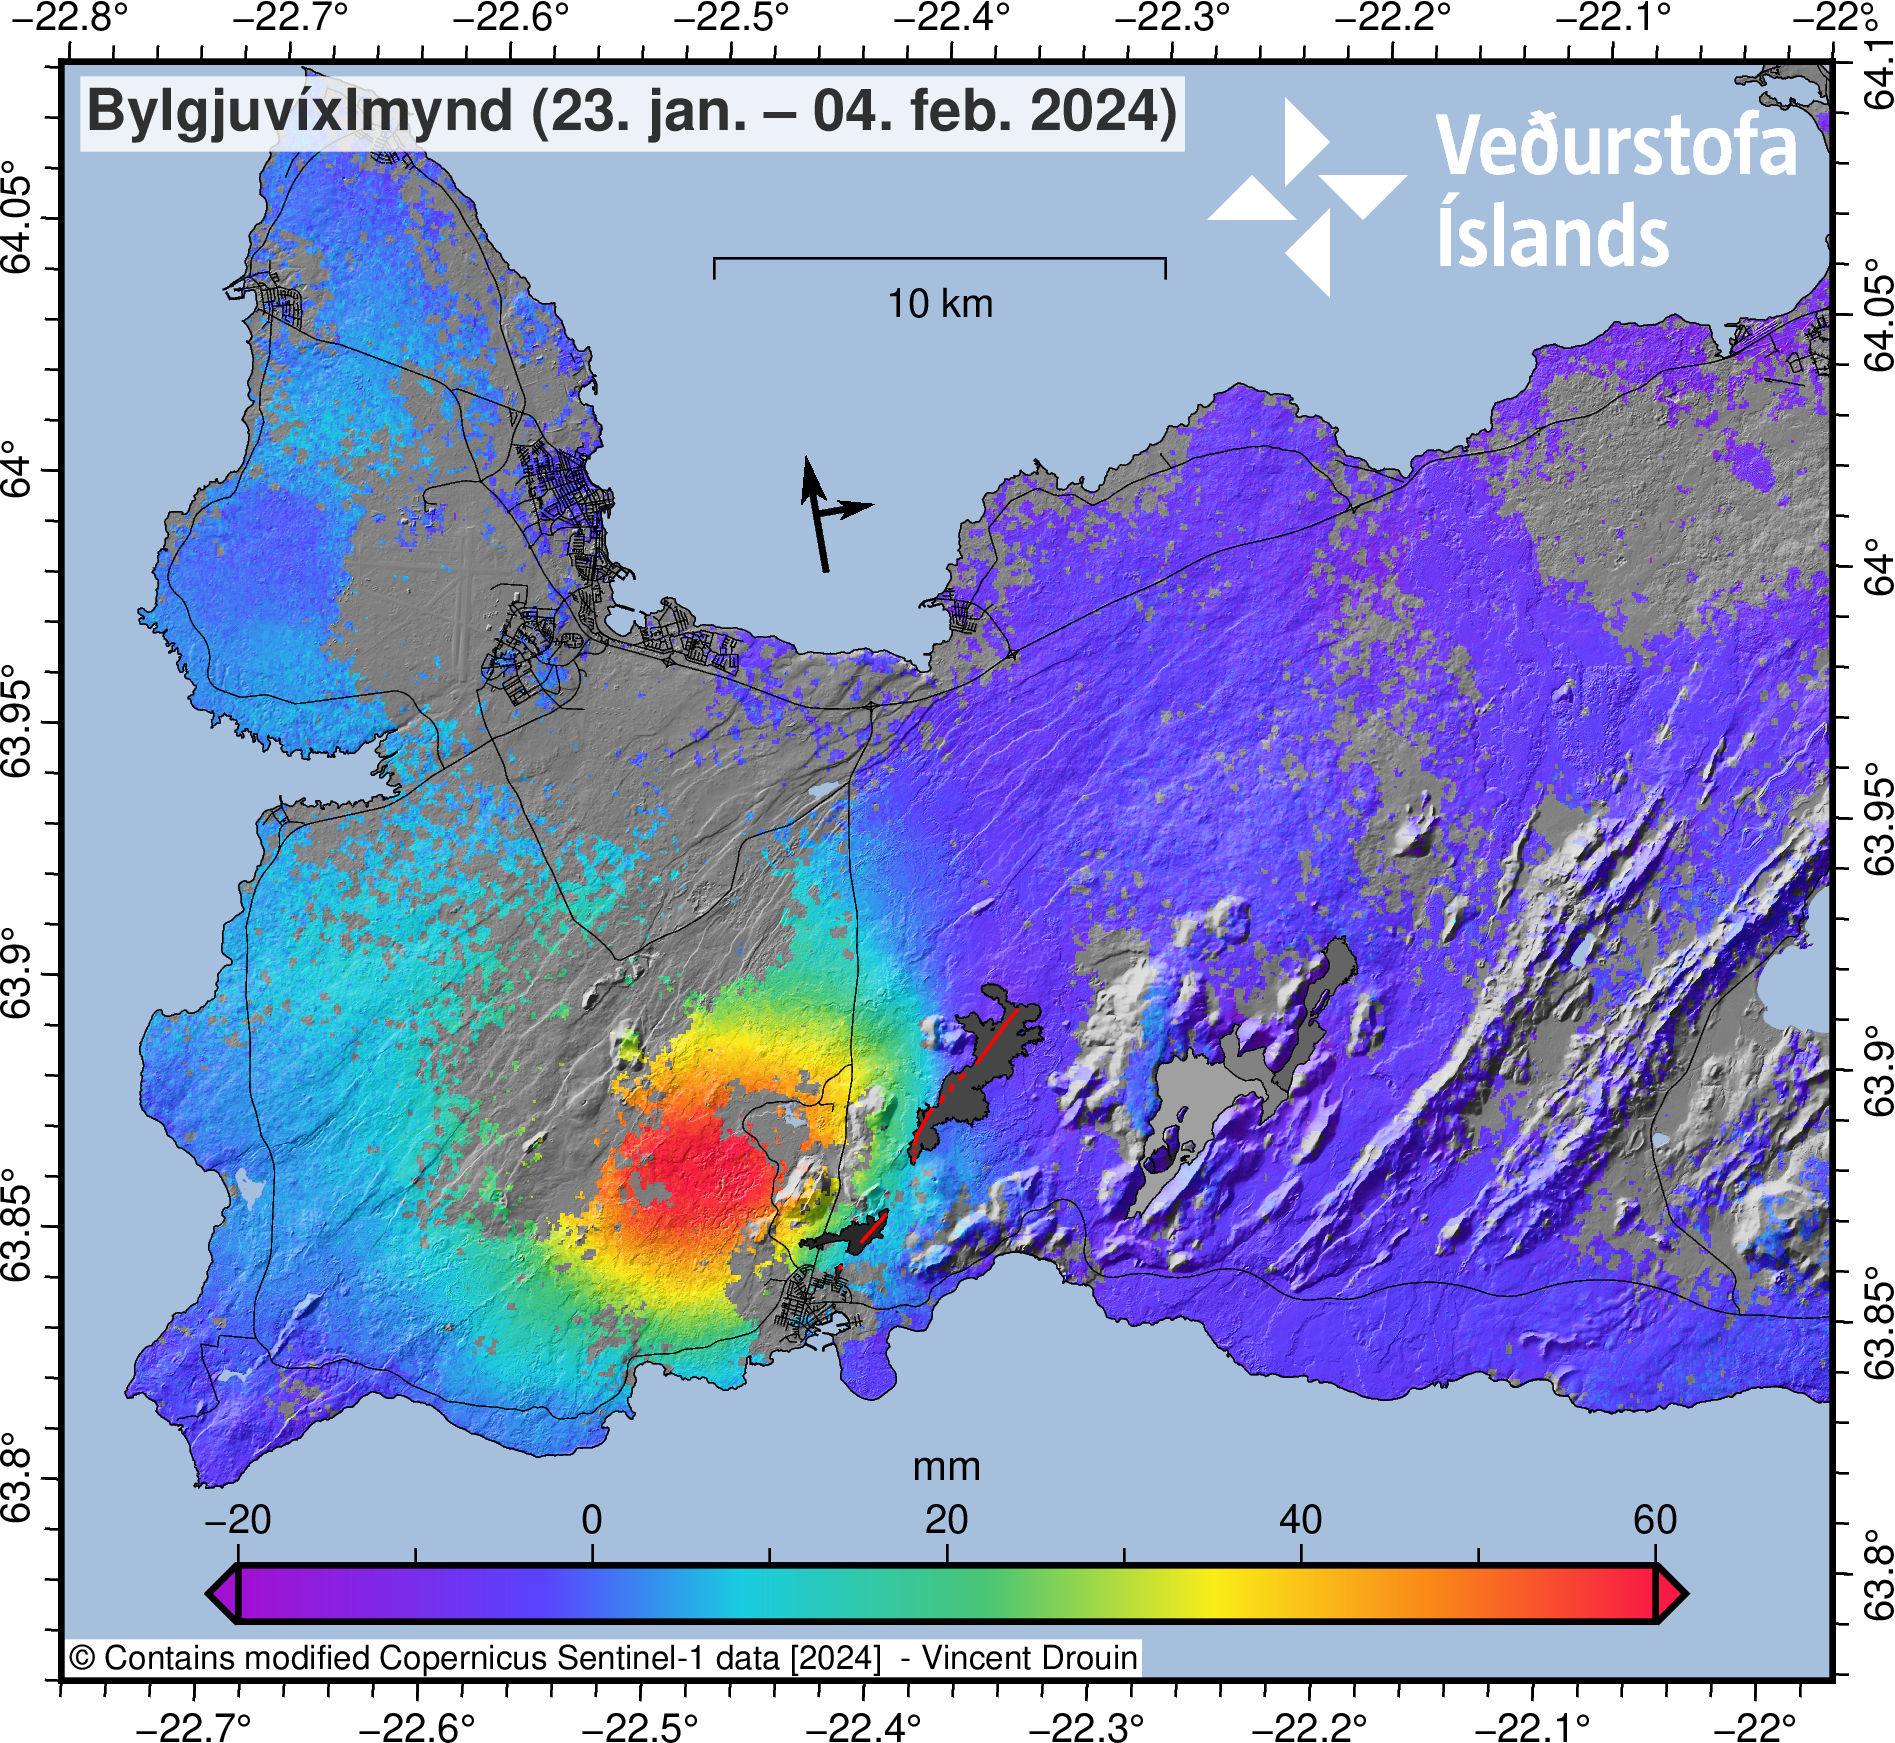 Updated models show further magma accumulation beneath Svartsengi